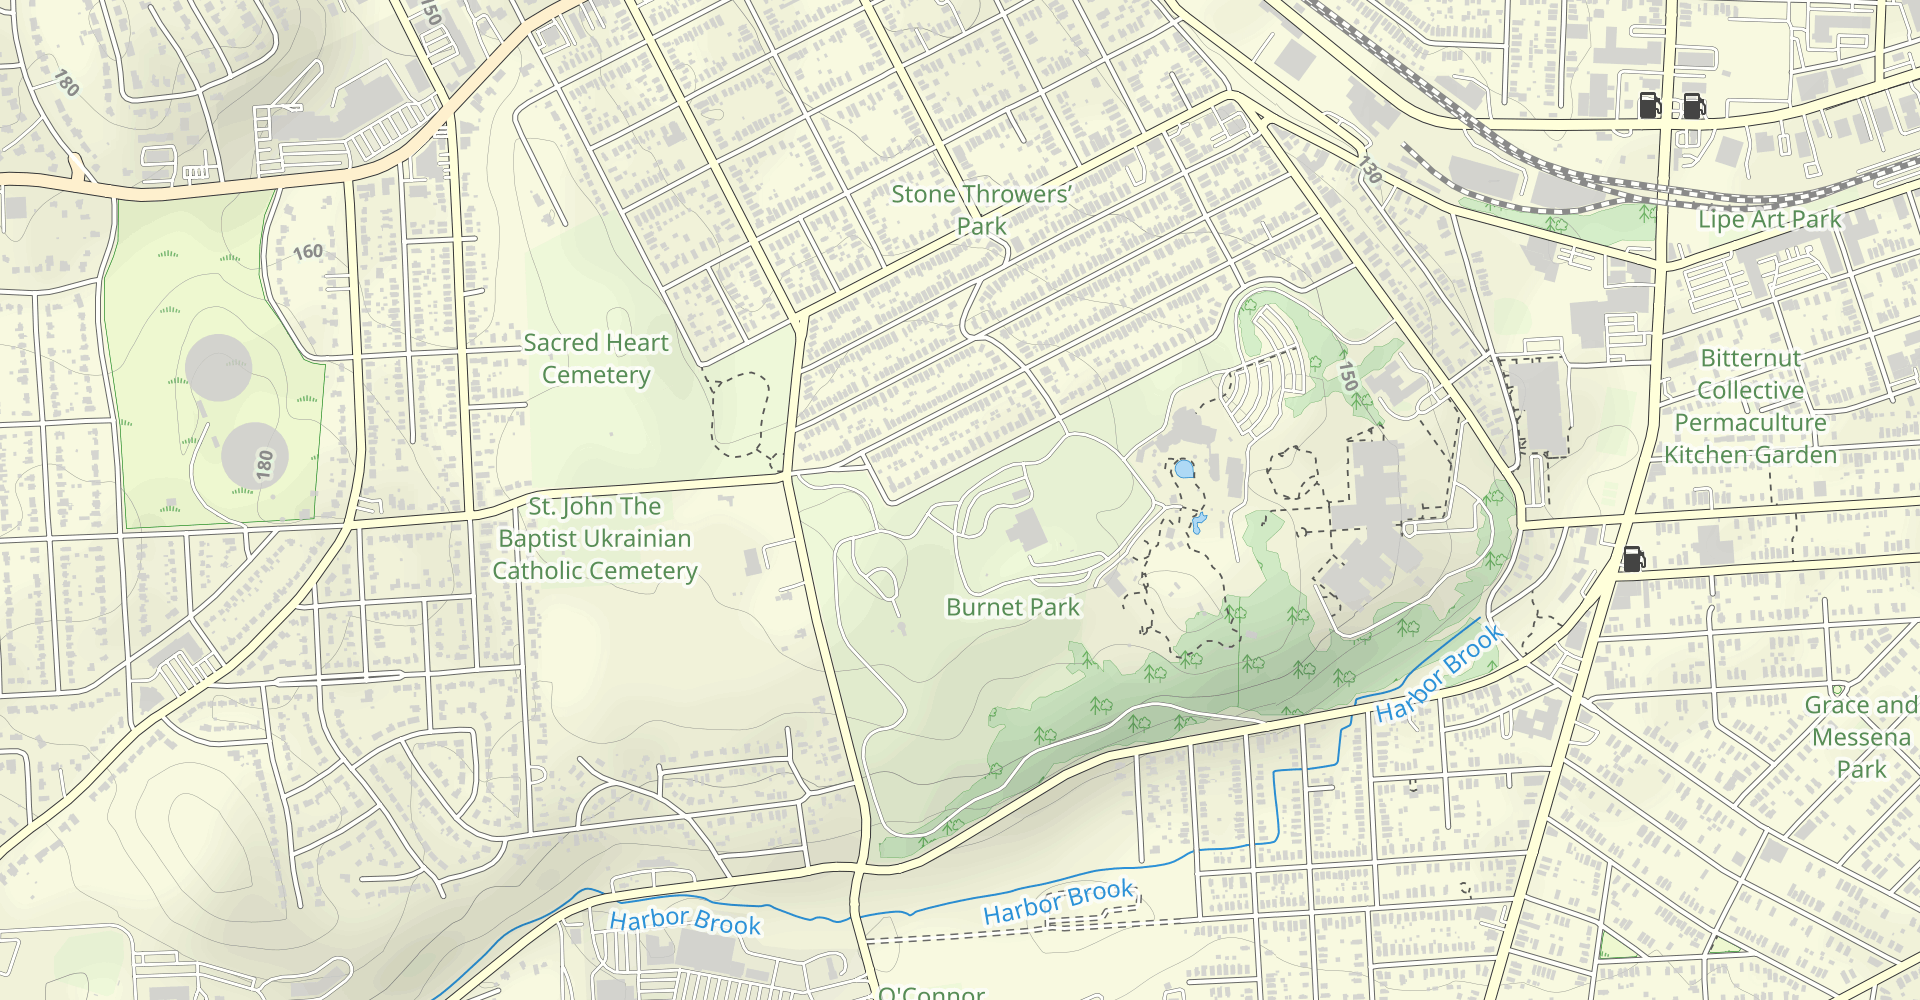 Burnet Park Loop